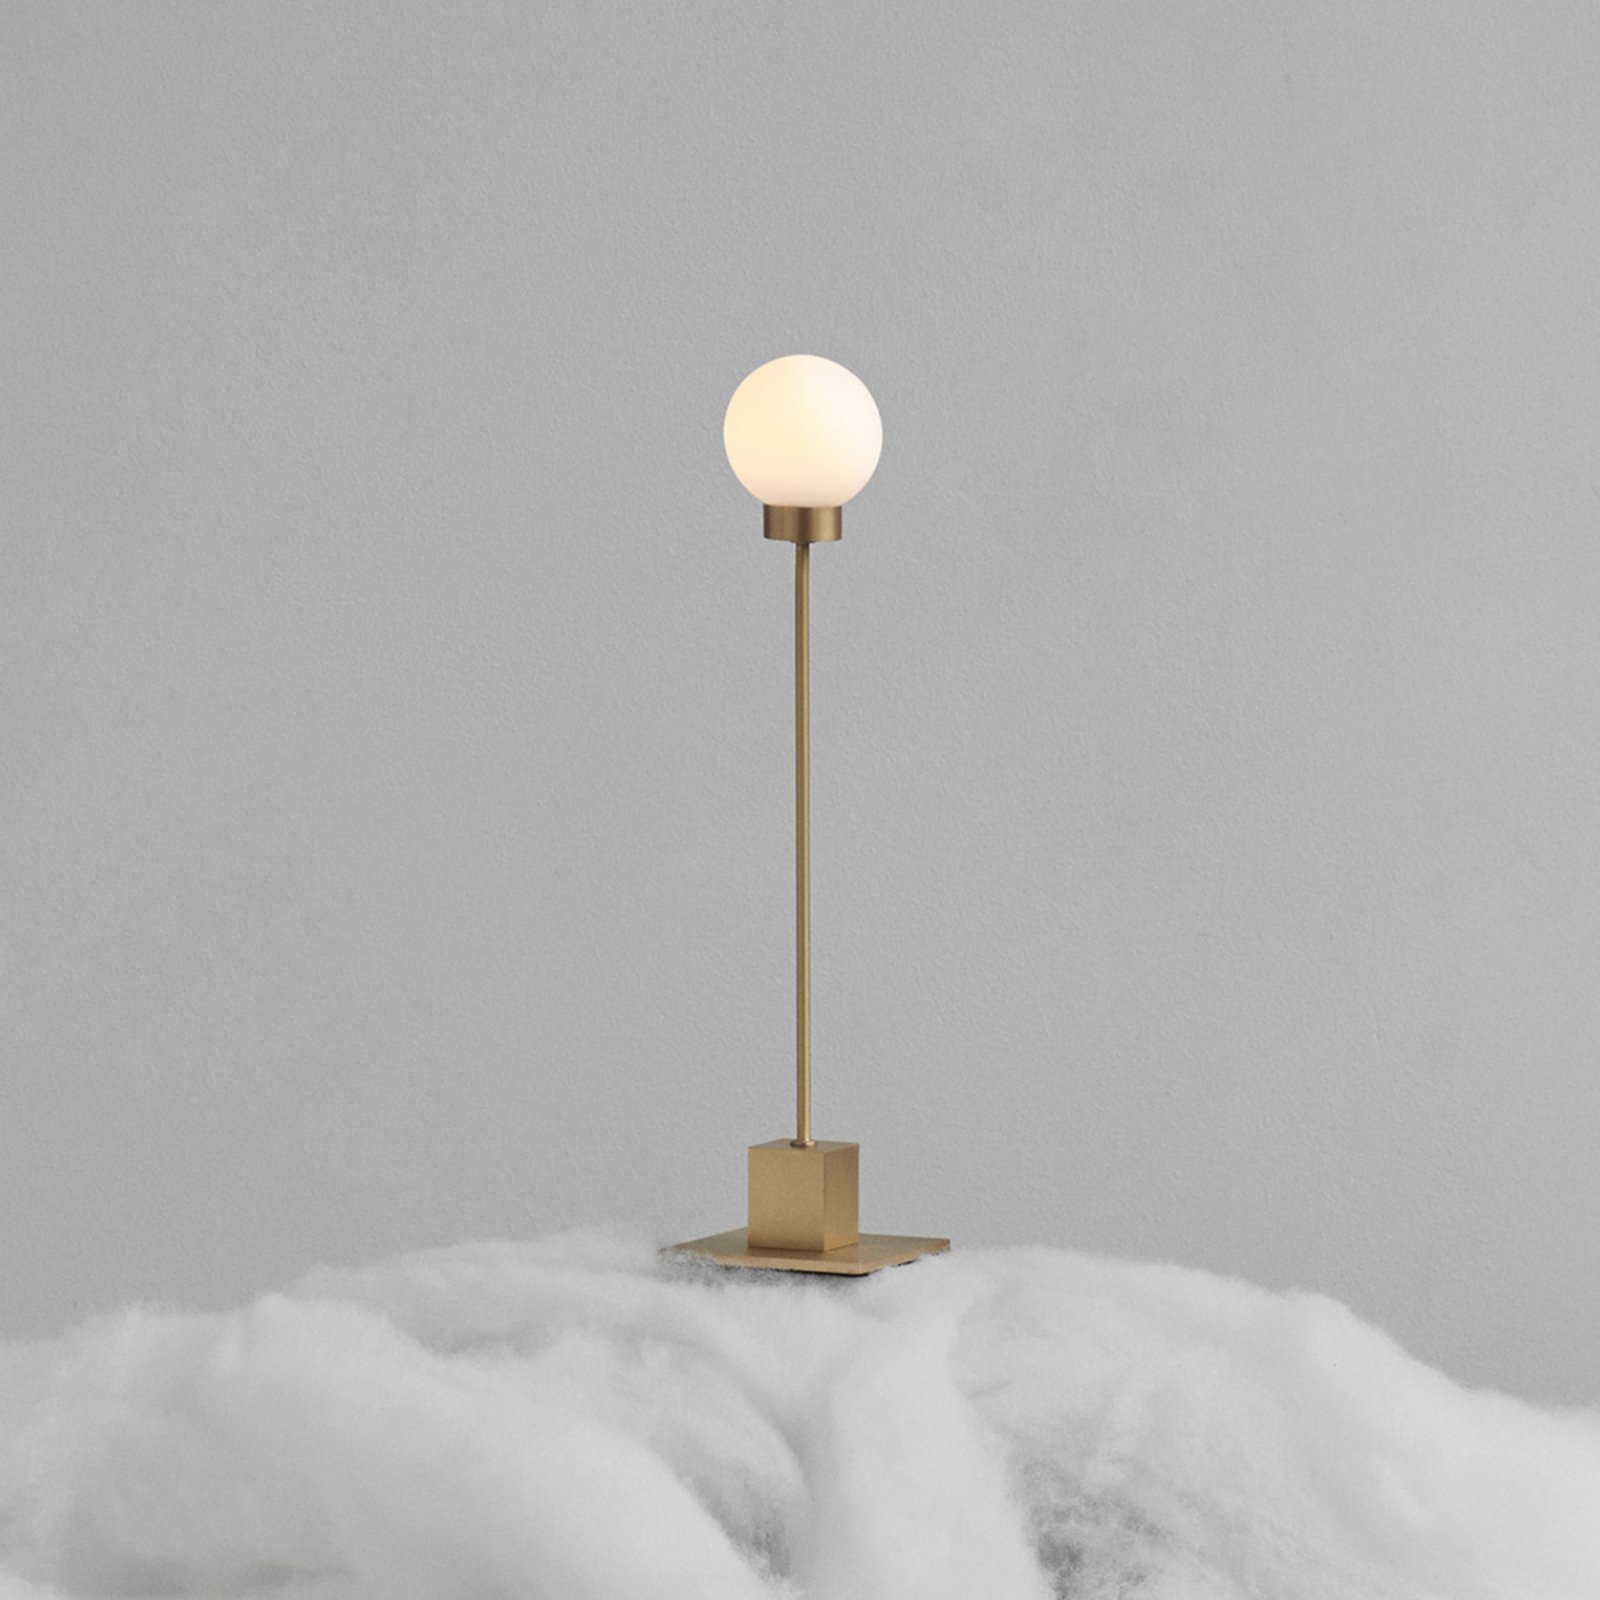 Северна настолна лампа Snowball, месинг